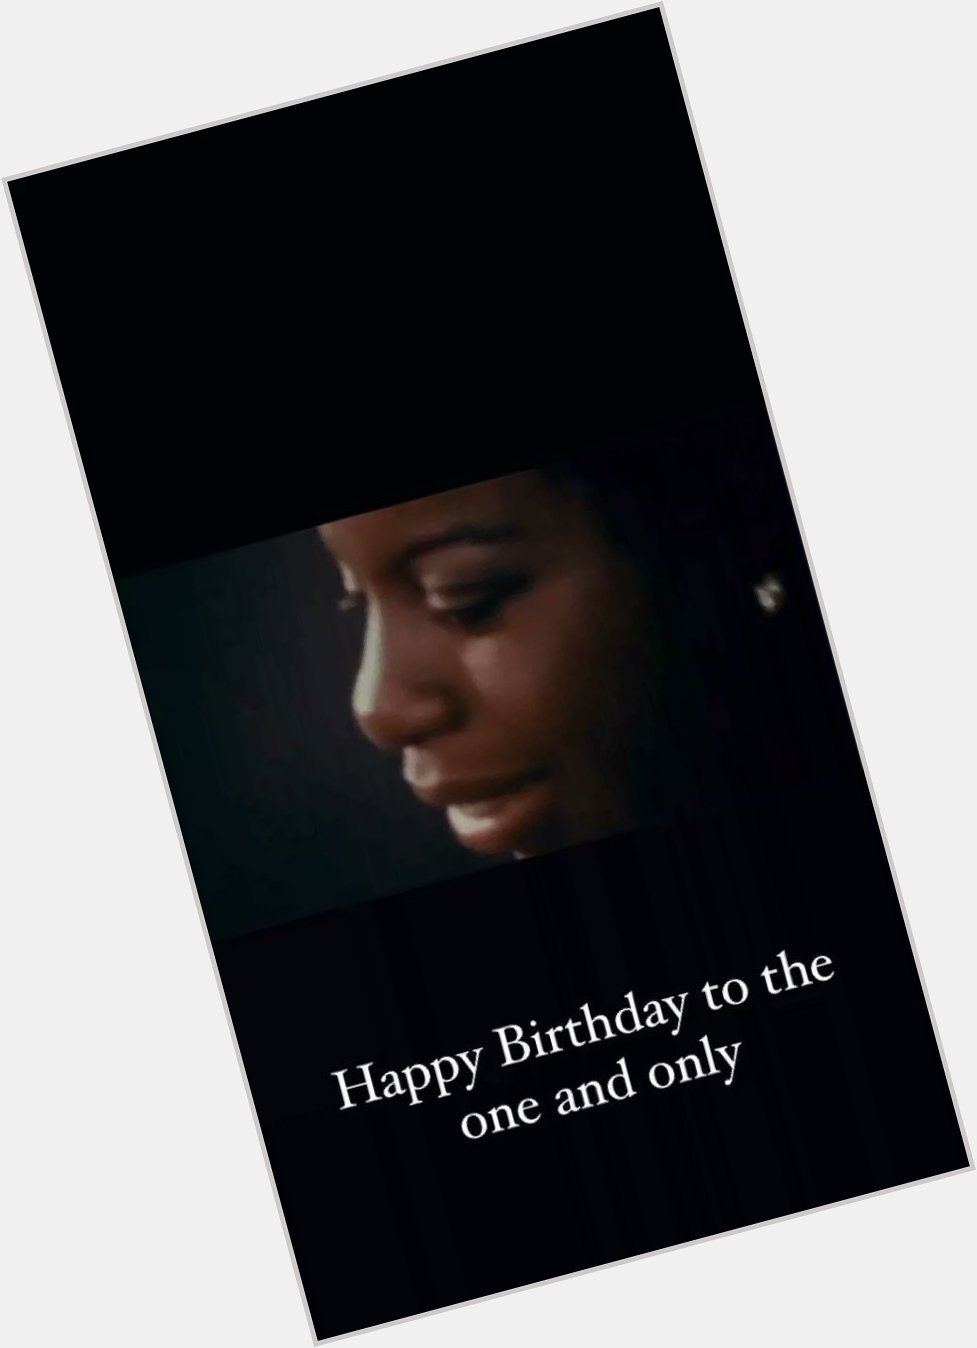 Hozier wishing Nina Simone a Happy Birthday via Instagram Stories 